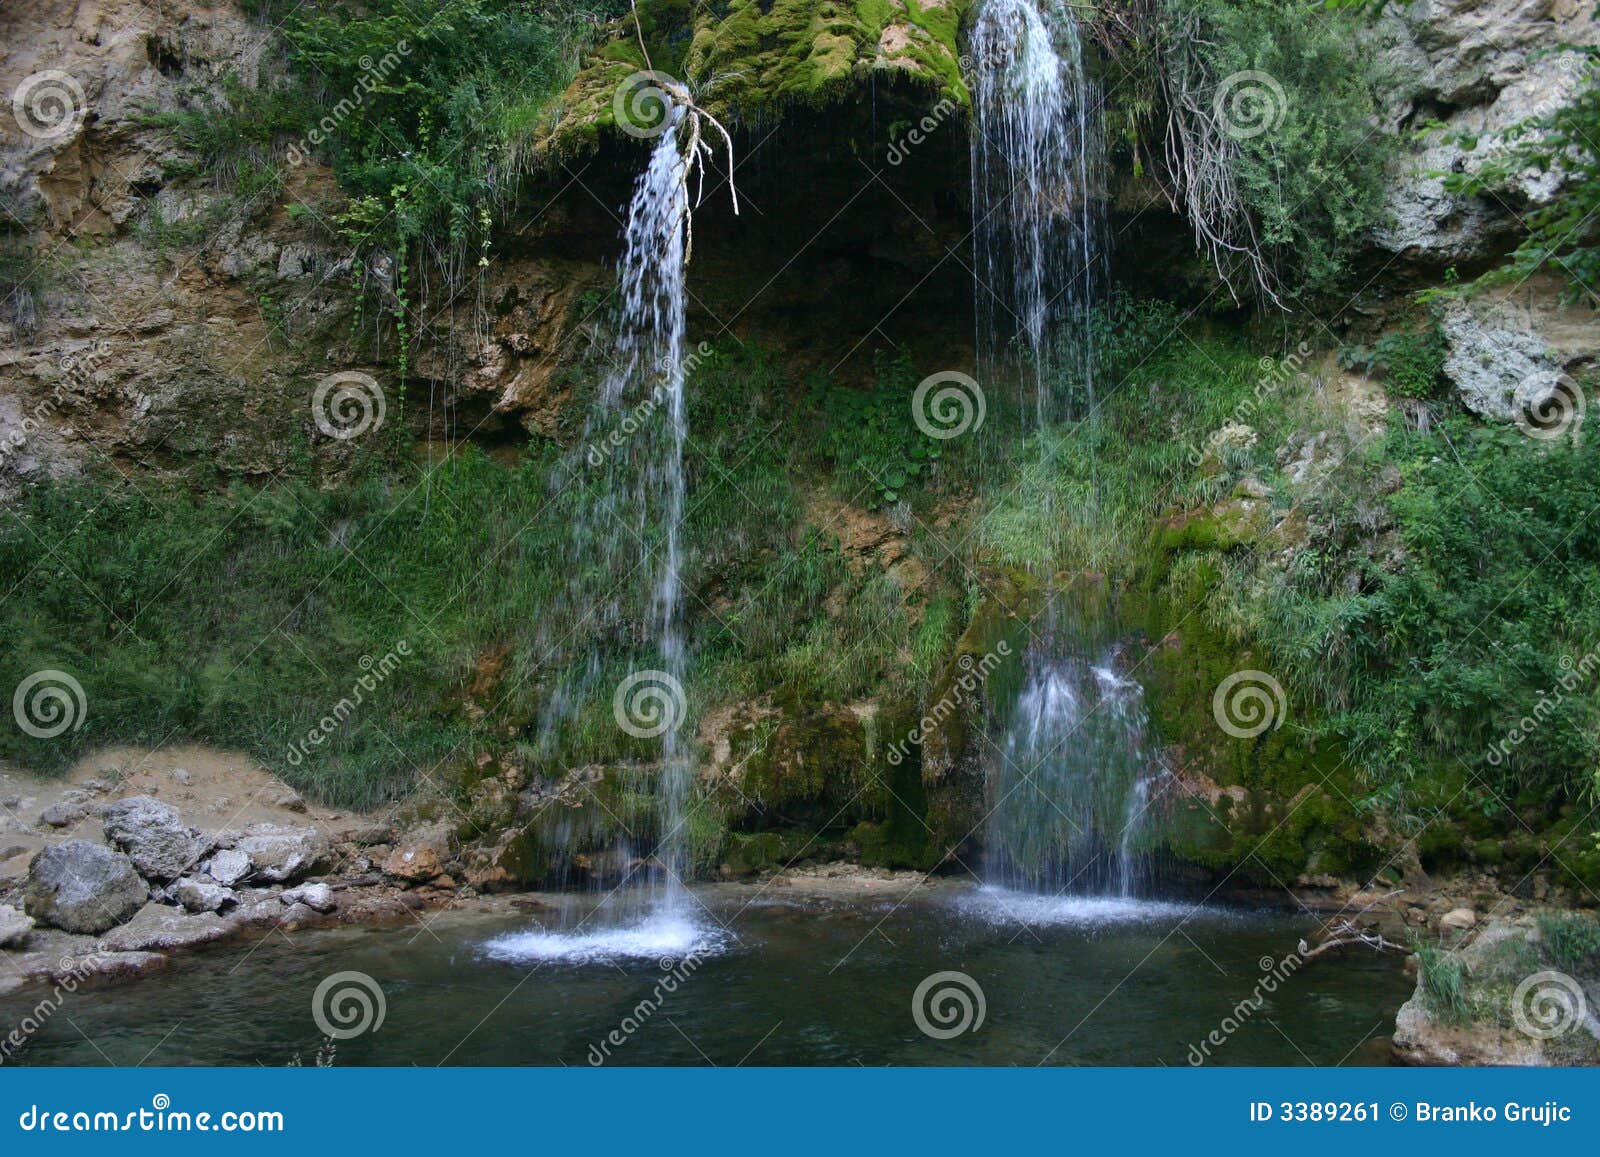 waterfall lisine, serbia